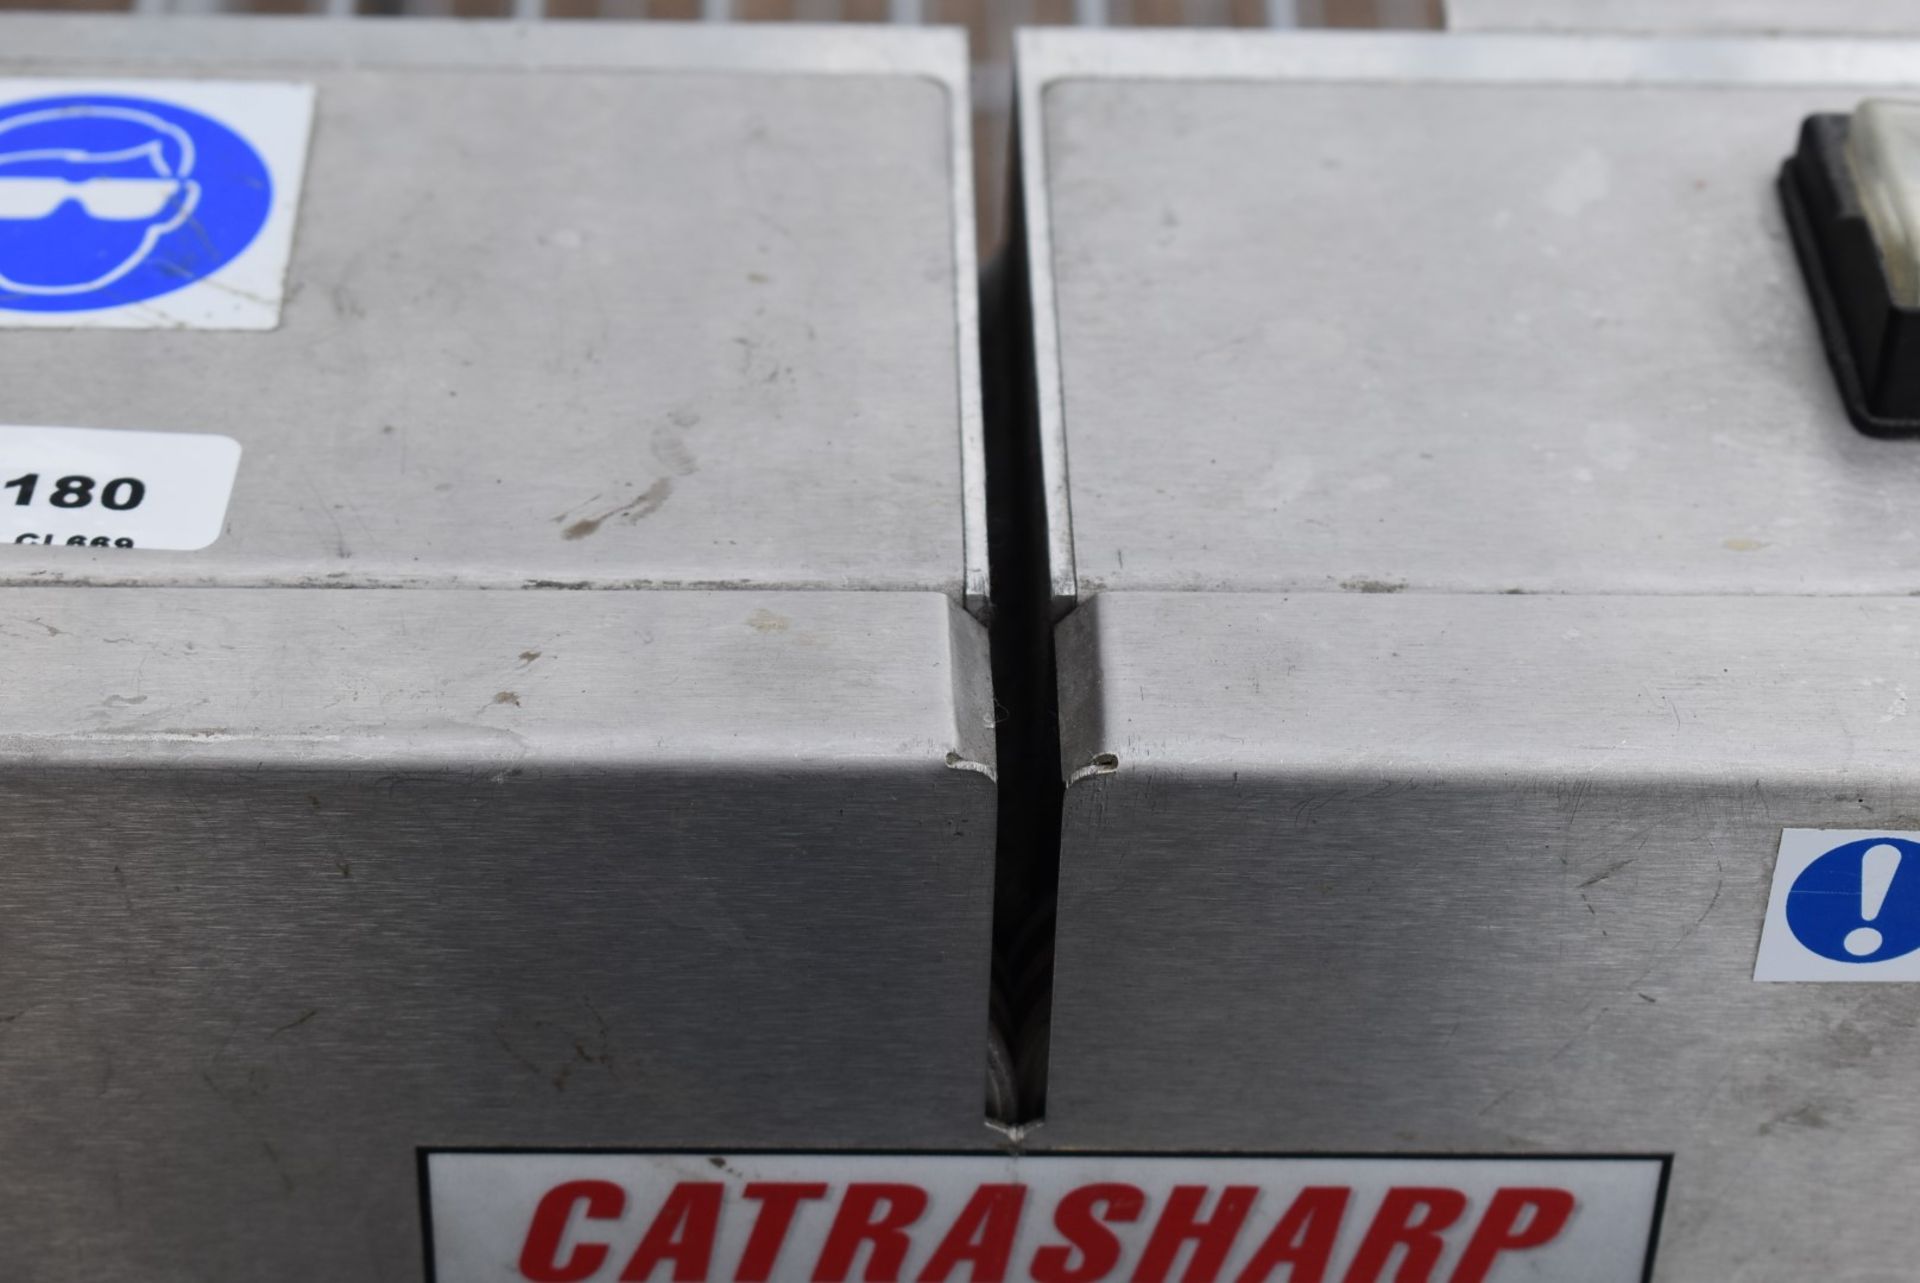 1 x CatraSharp Commercial Kitchen Professional Knife Sharpener - 240v - RRP £770 - Recently Removed - Image 6 of 6